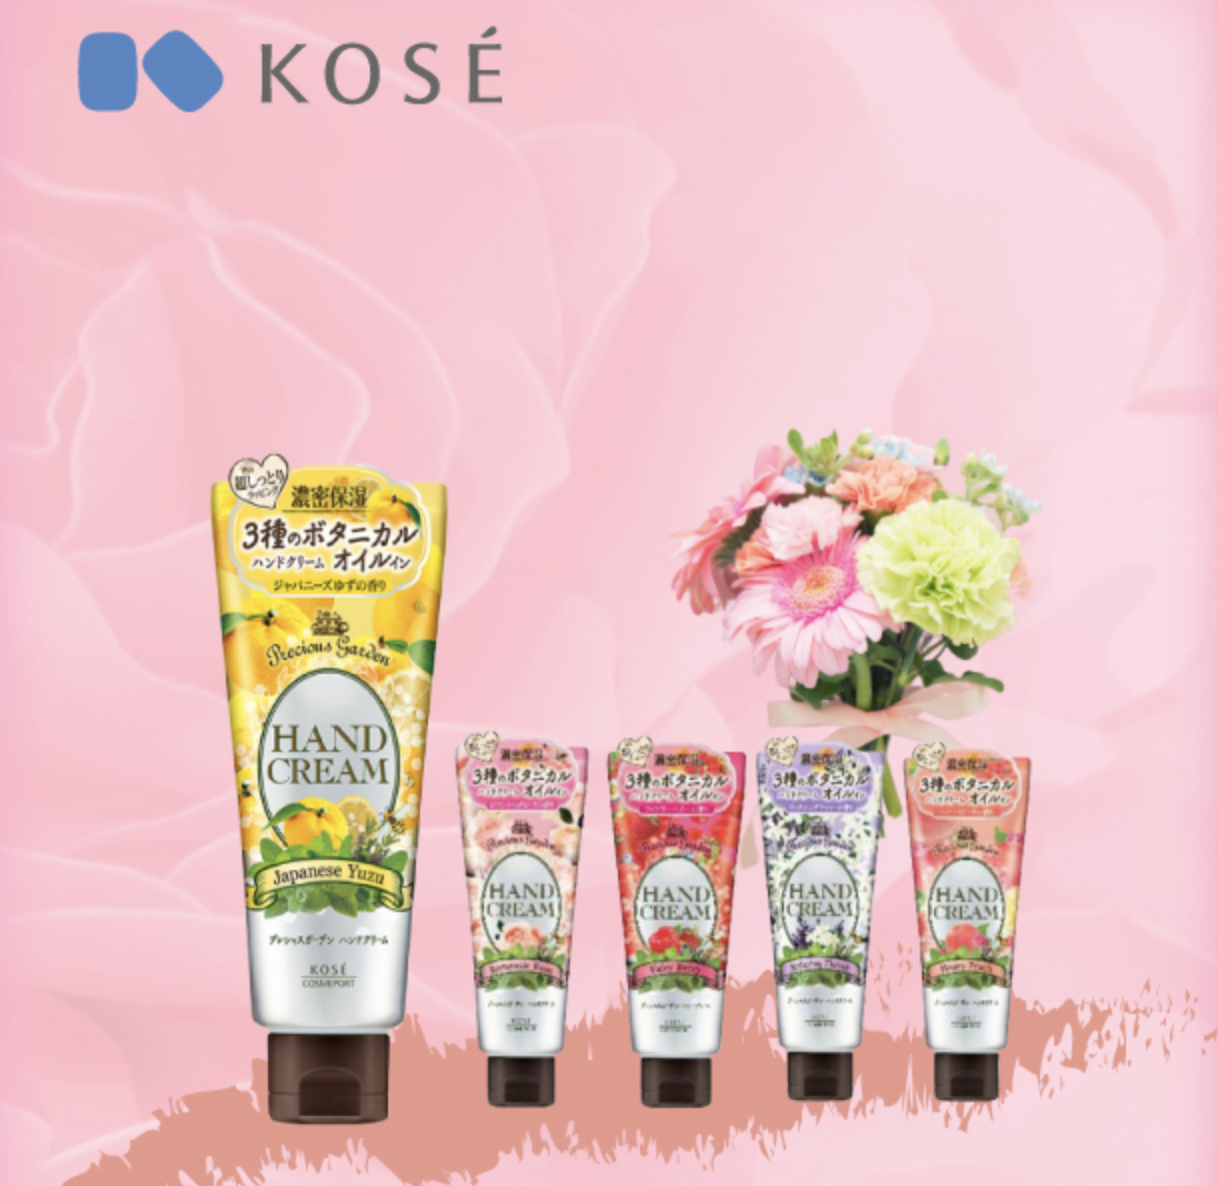 
                  
                    KOSE Precious Garden Hand Cream - Romantic Rose 70g
                  
                